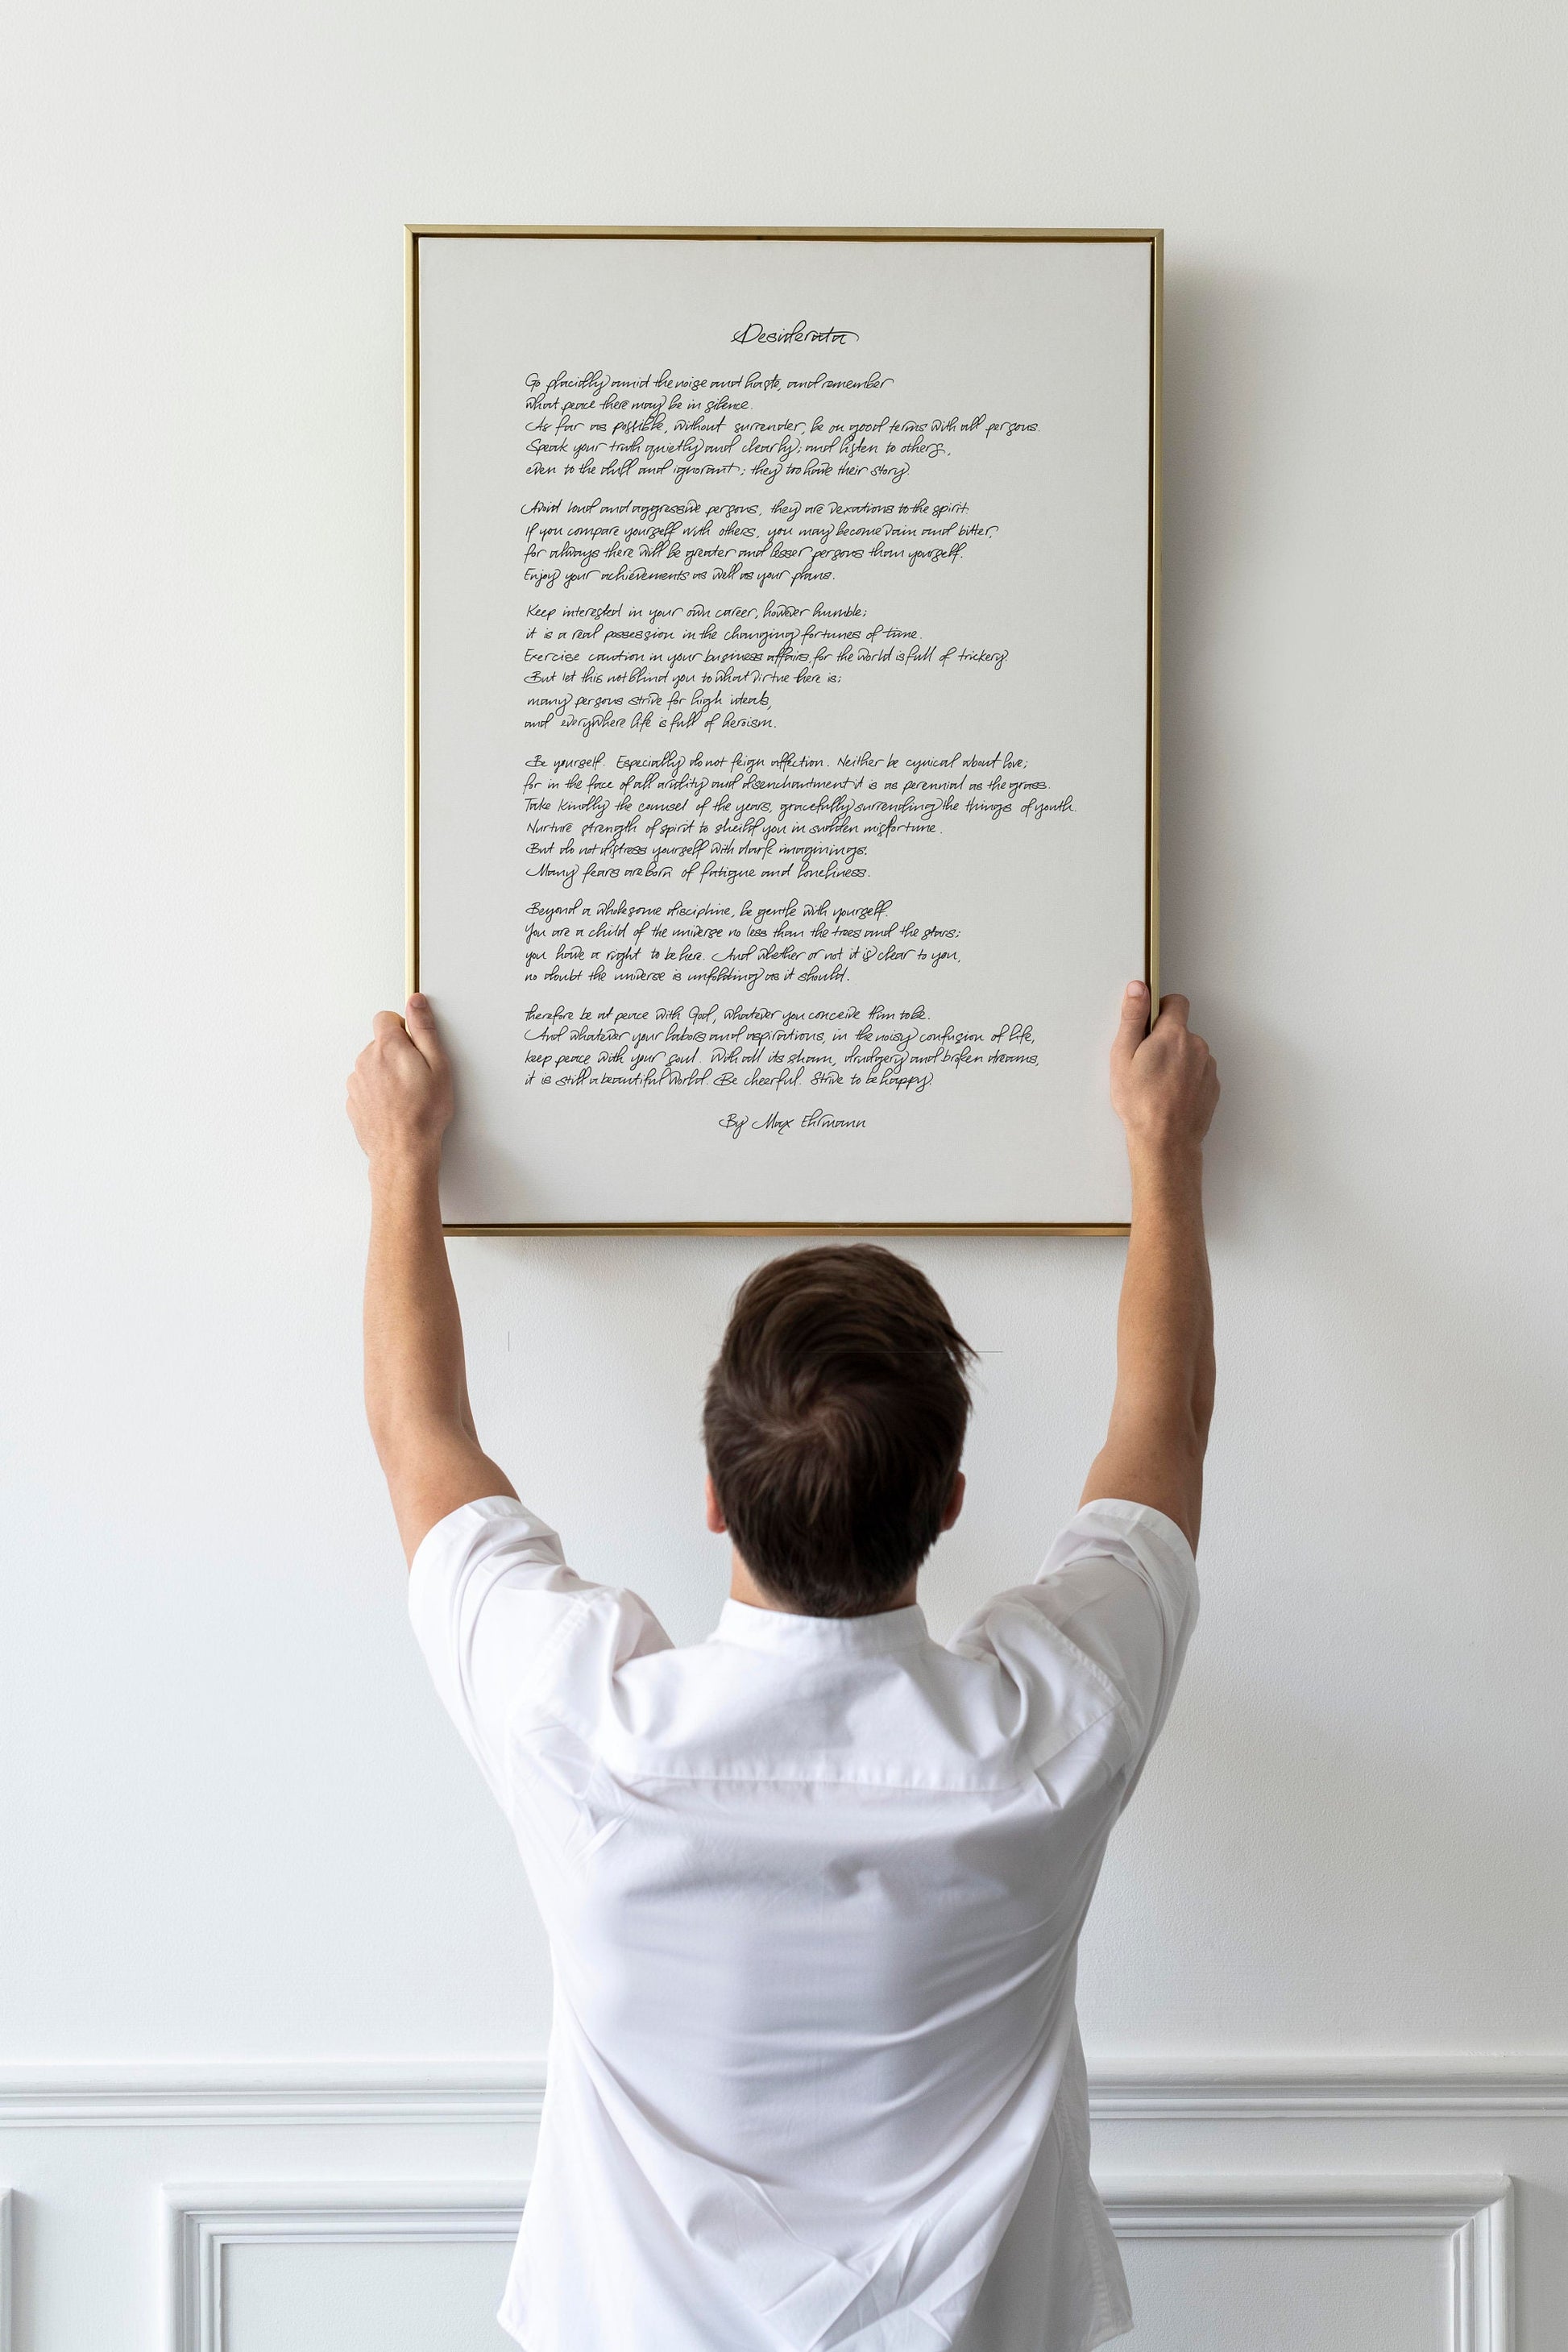 Desiderata Framed Handwritten Print by Max Ehrmann - Desiderata Poem